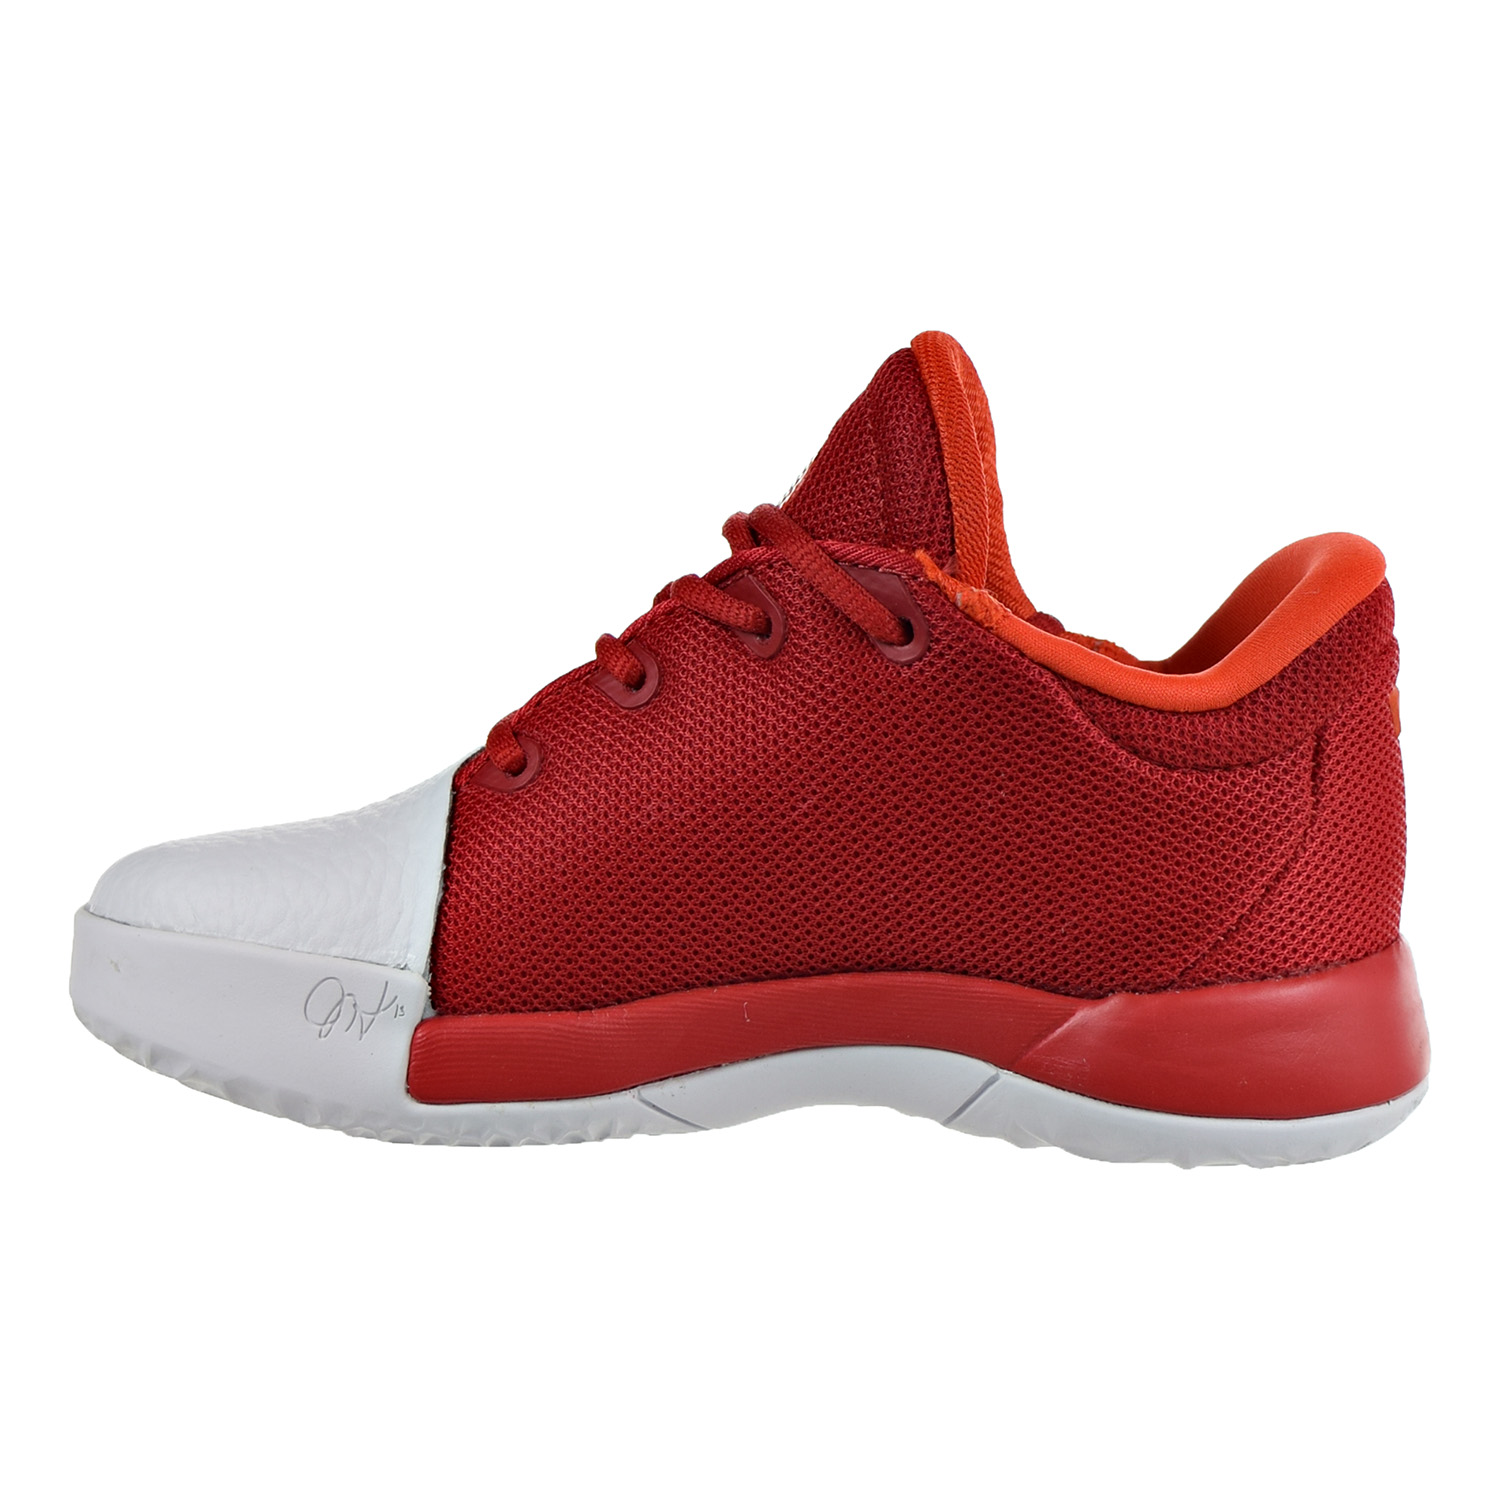 Adidas Harden Vol.1 C Little Kid's Shoes Scarlet-White bw0627 | eBay